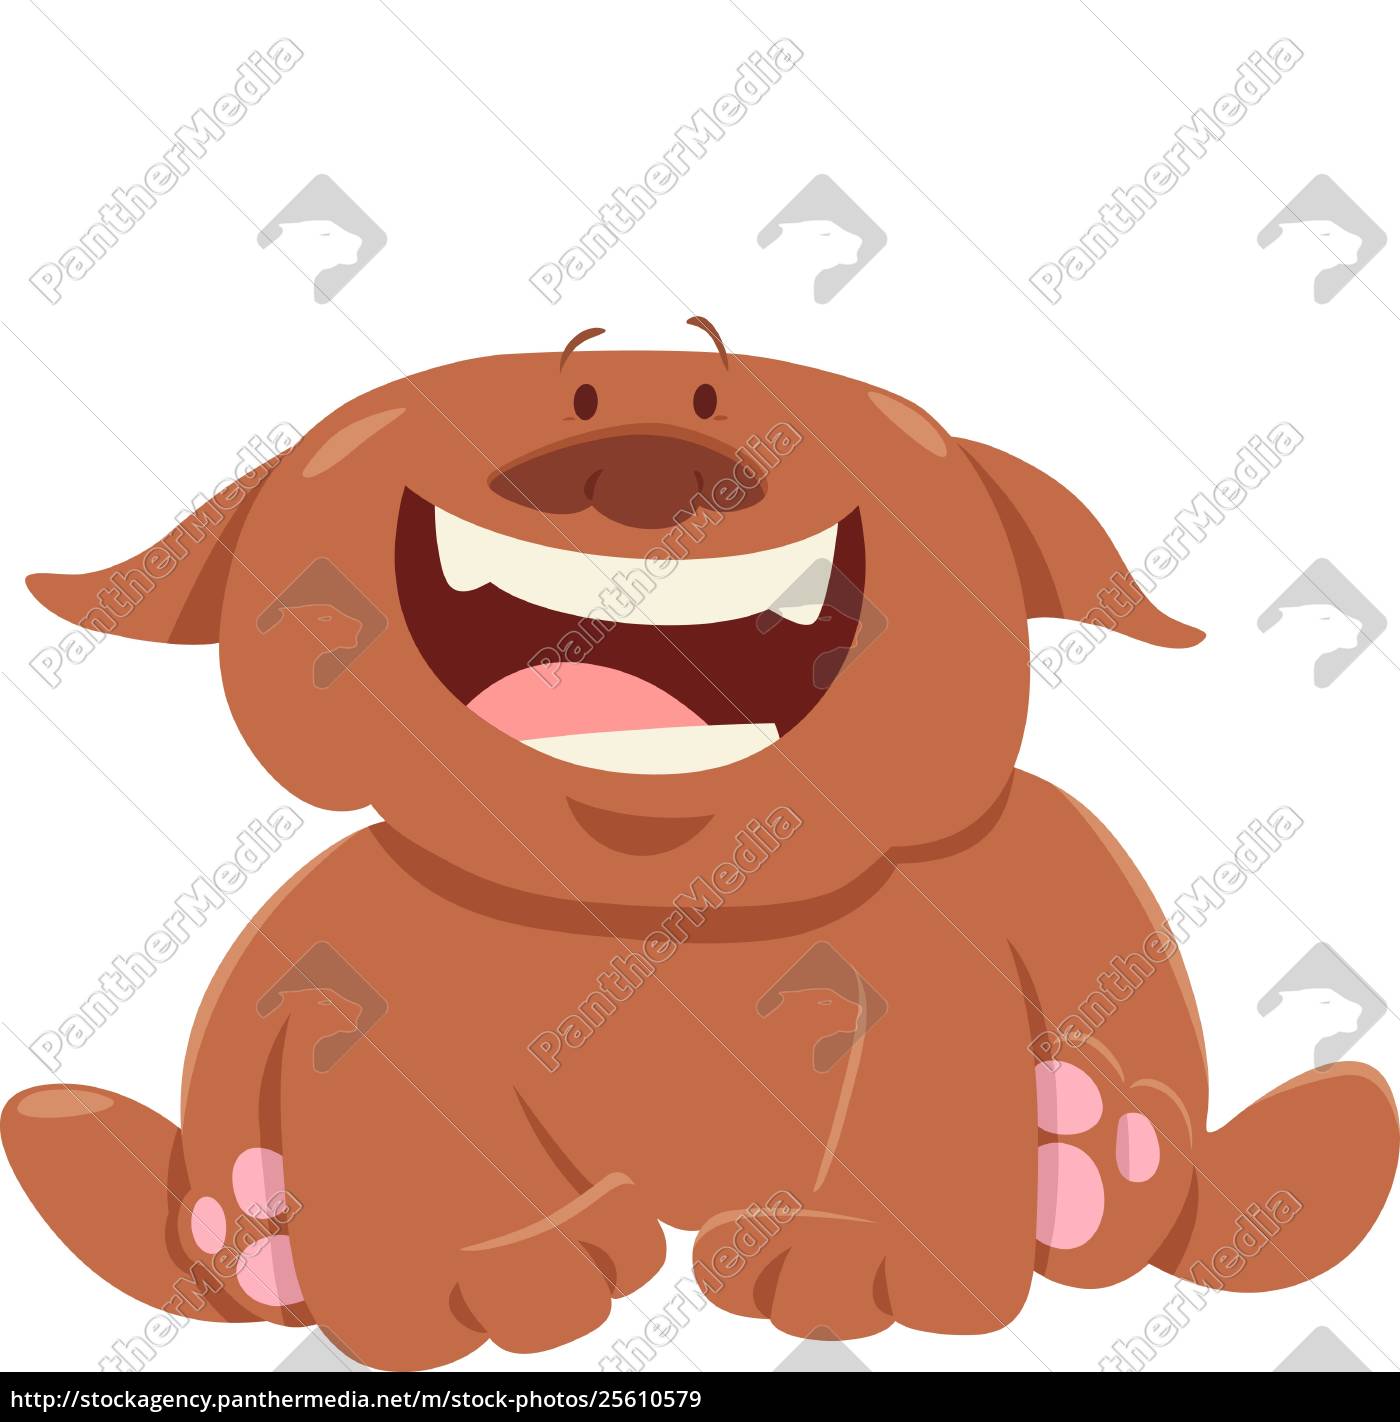 Lustige Hunde Oder Welpencartoon Charakter Lizenzfreies Bild 25610579 Bildagentur 3843